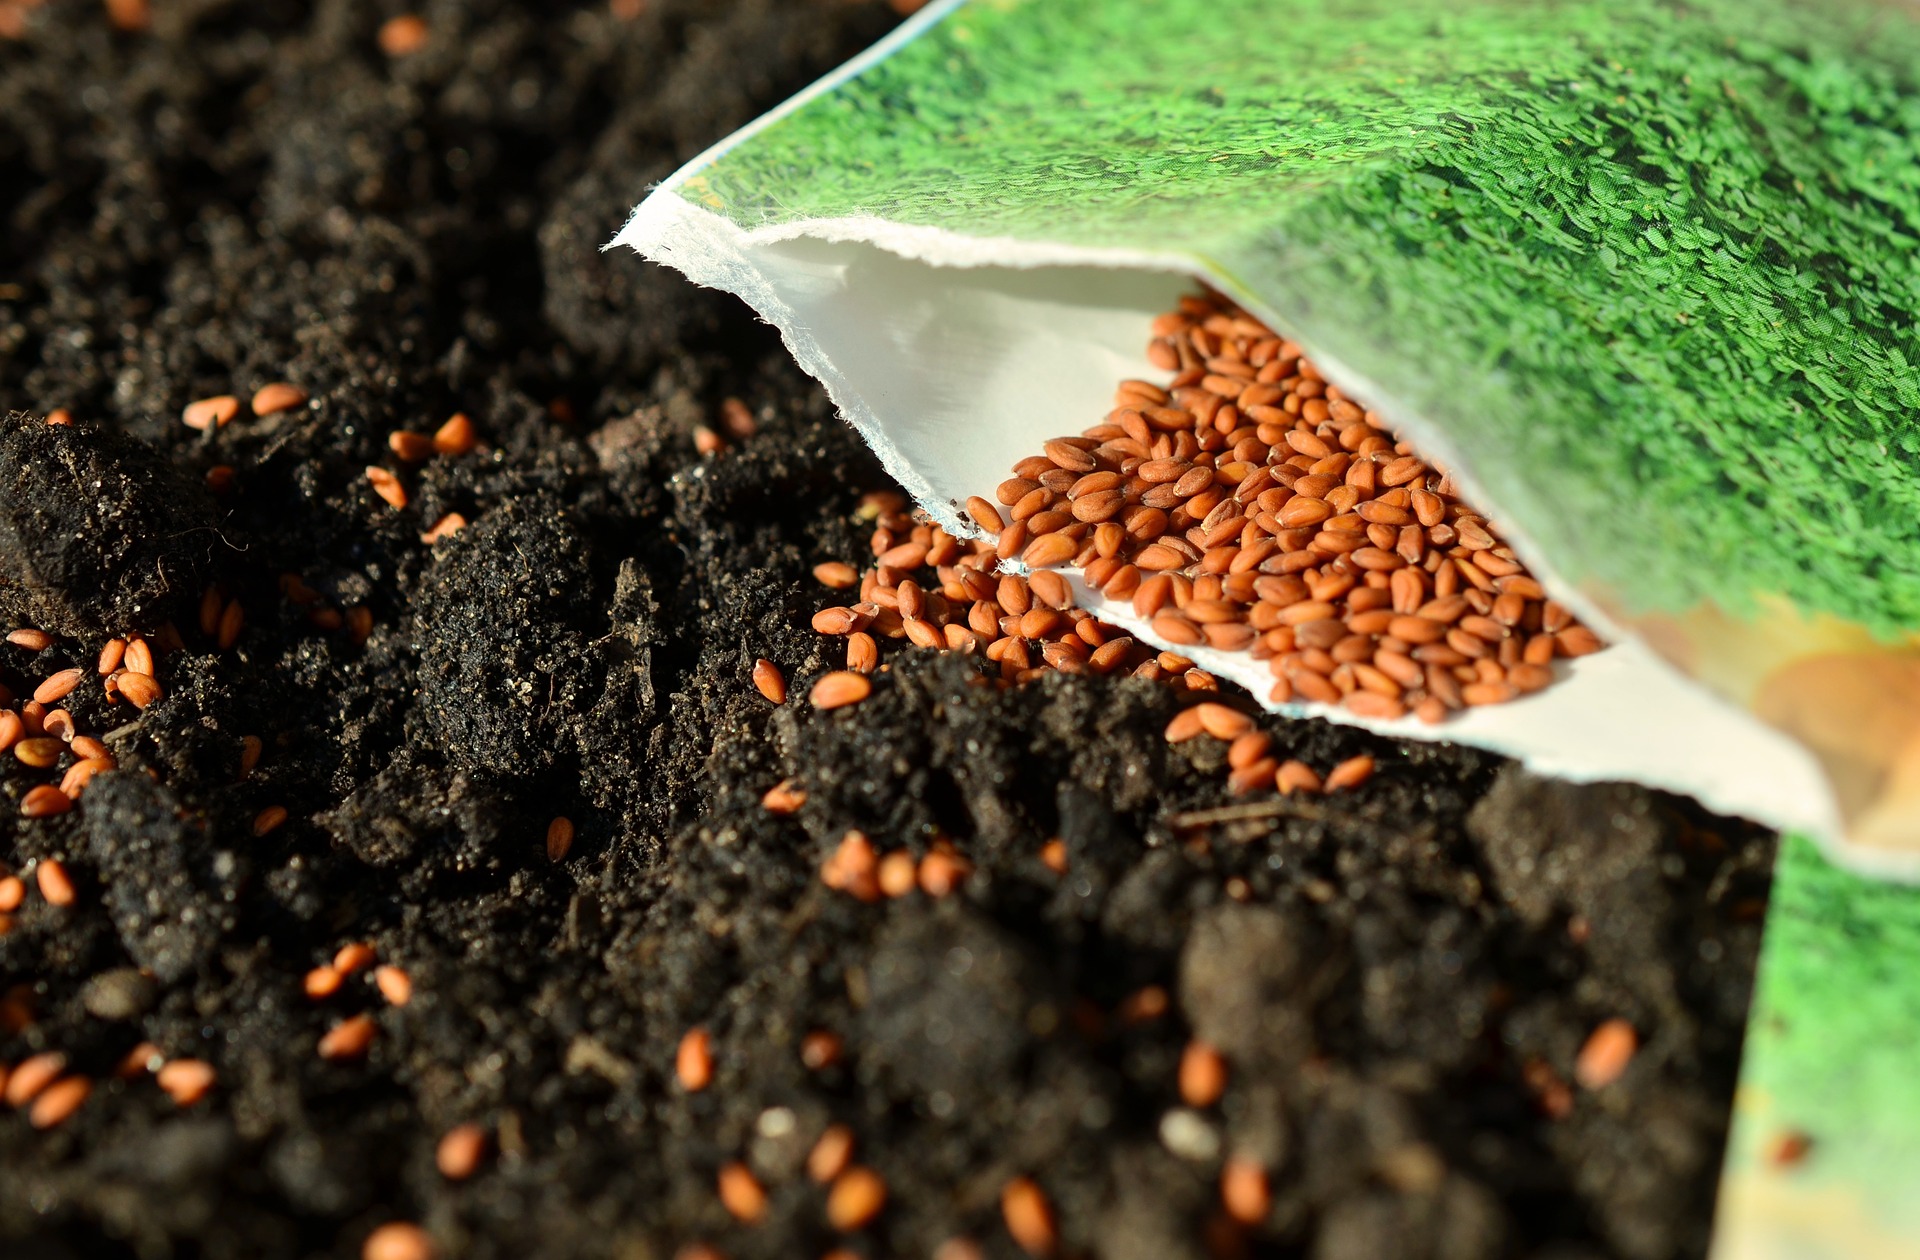 Seeds on soil.